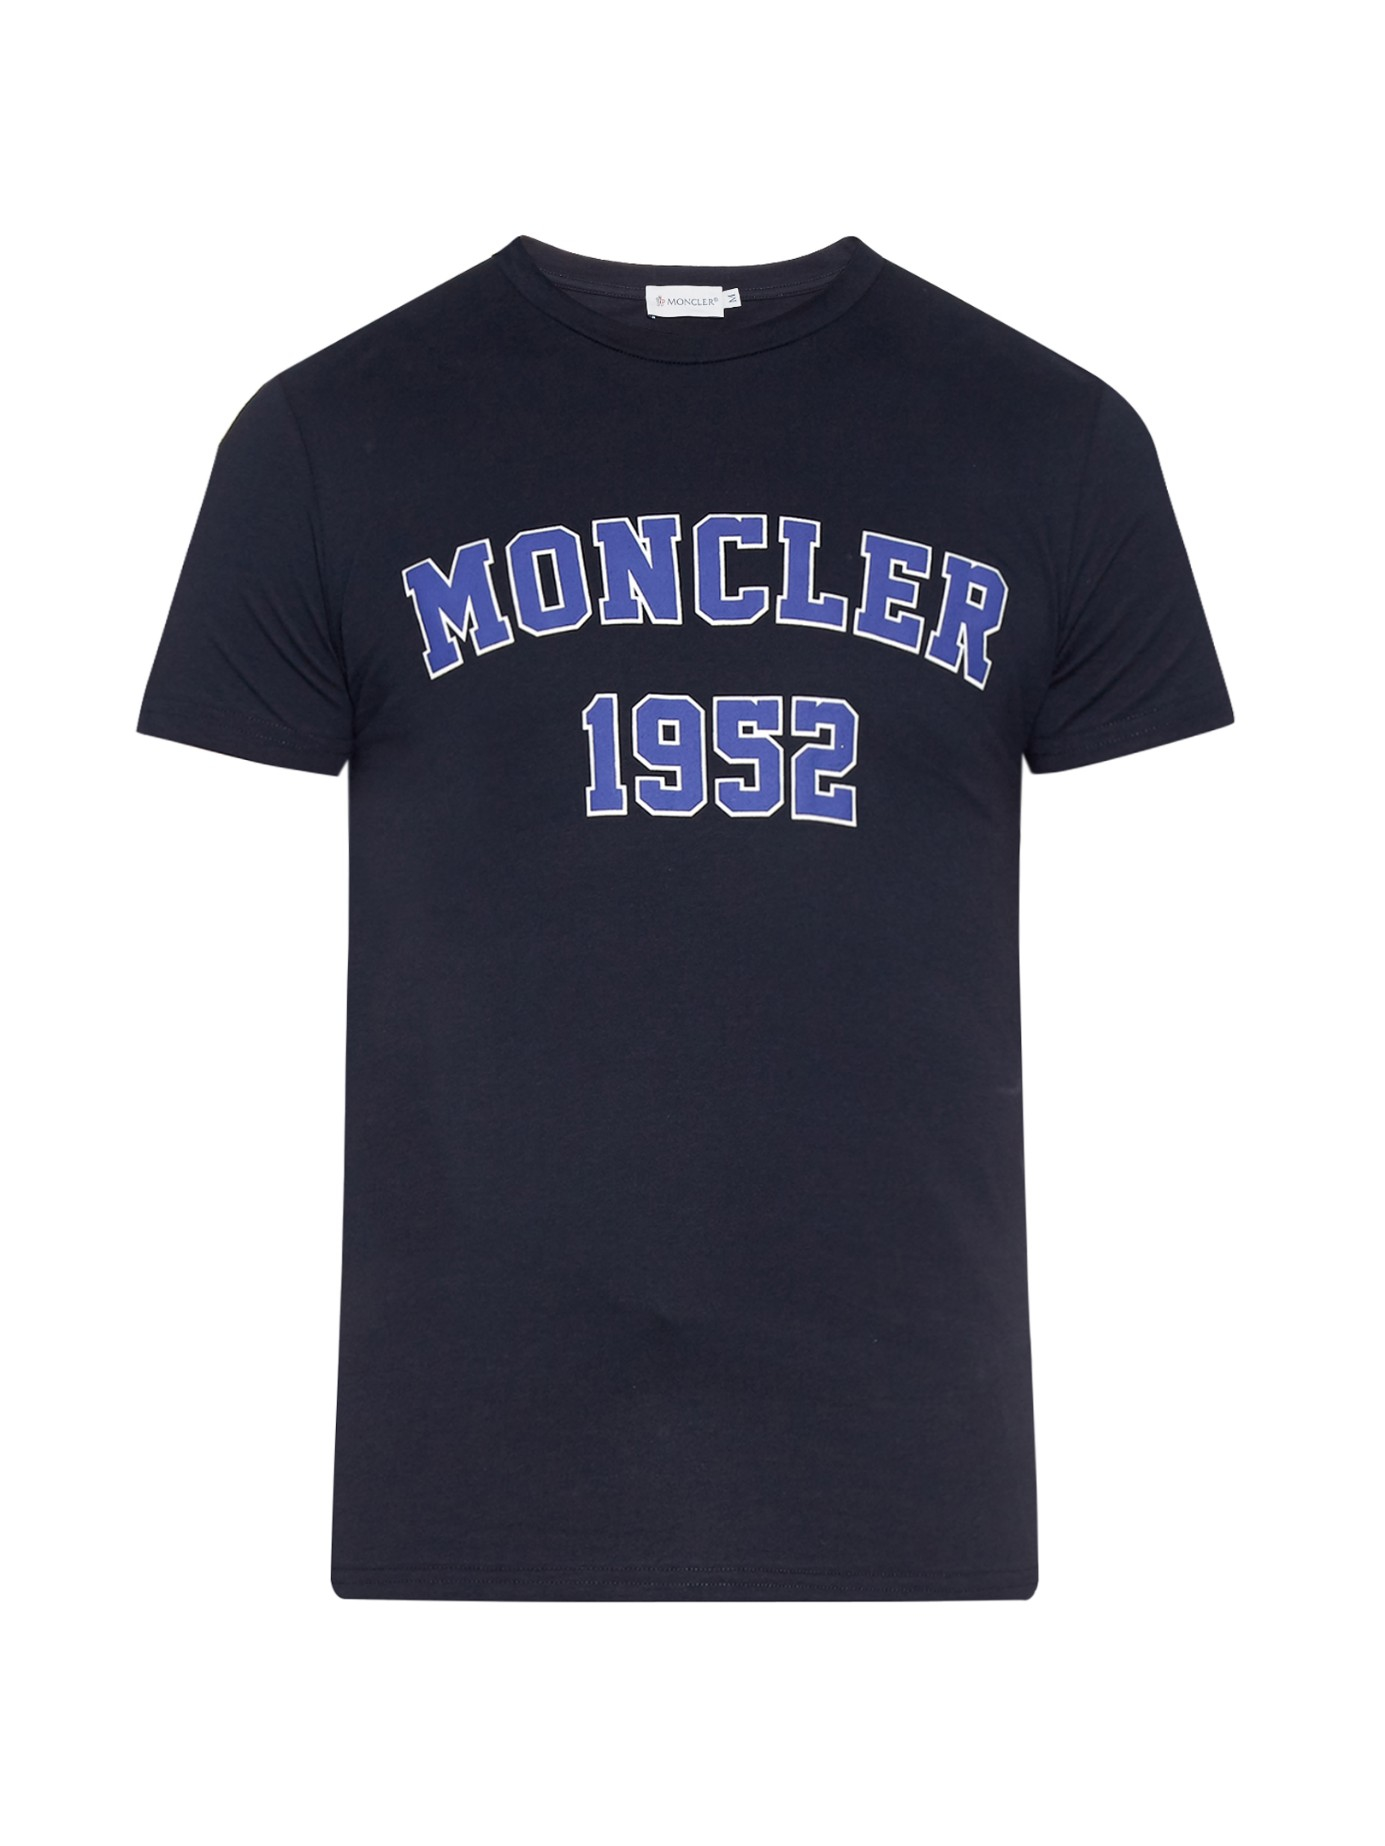 Moncler Cotton 1952 Logo-print Jersey T-shirt in Navy (Blue) for Men - Lyst